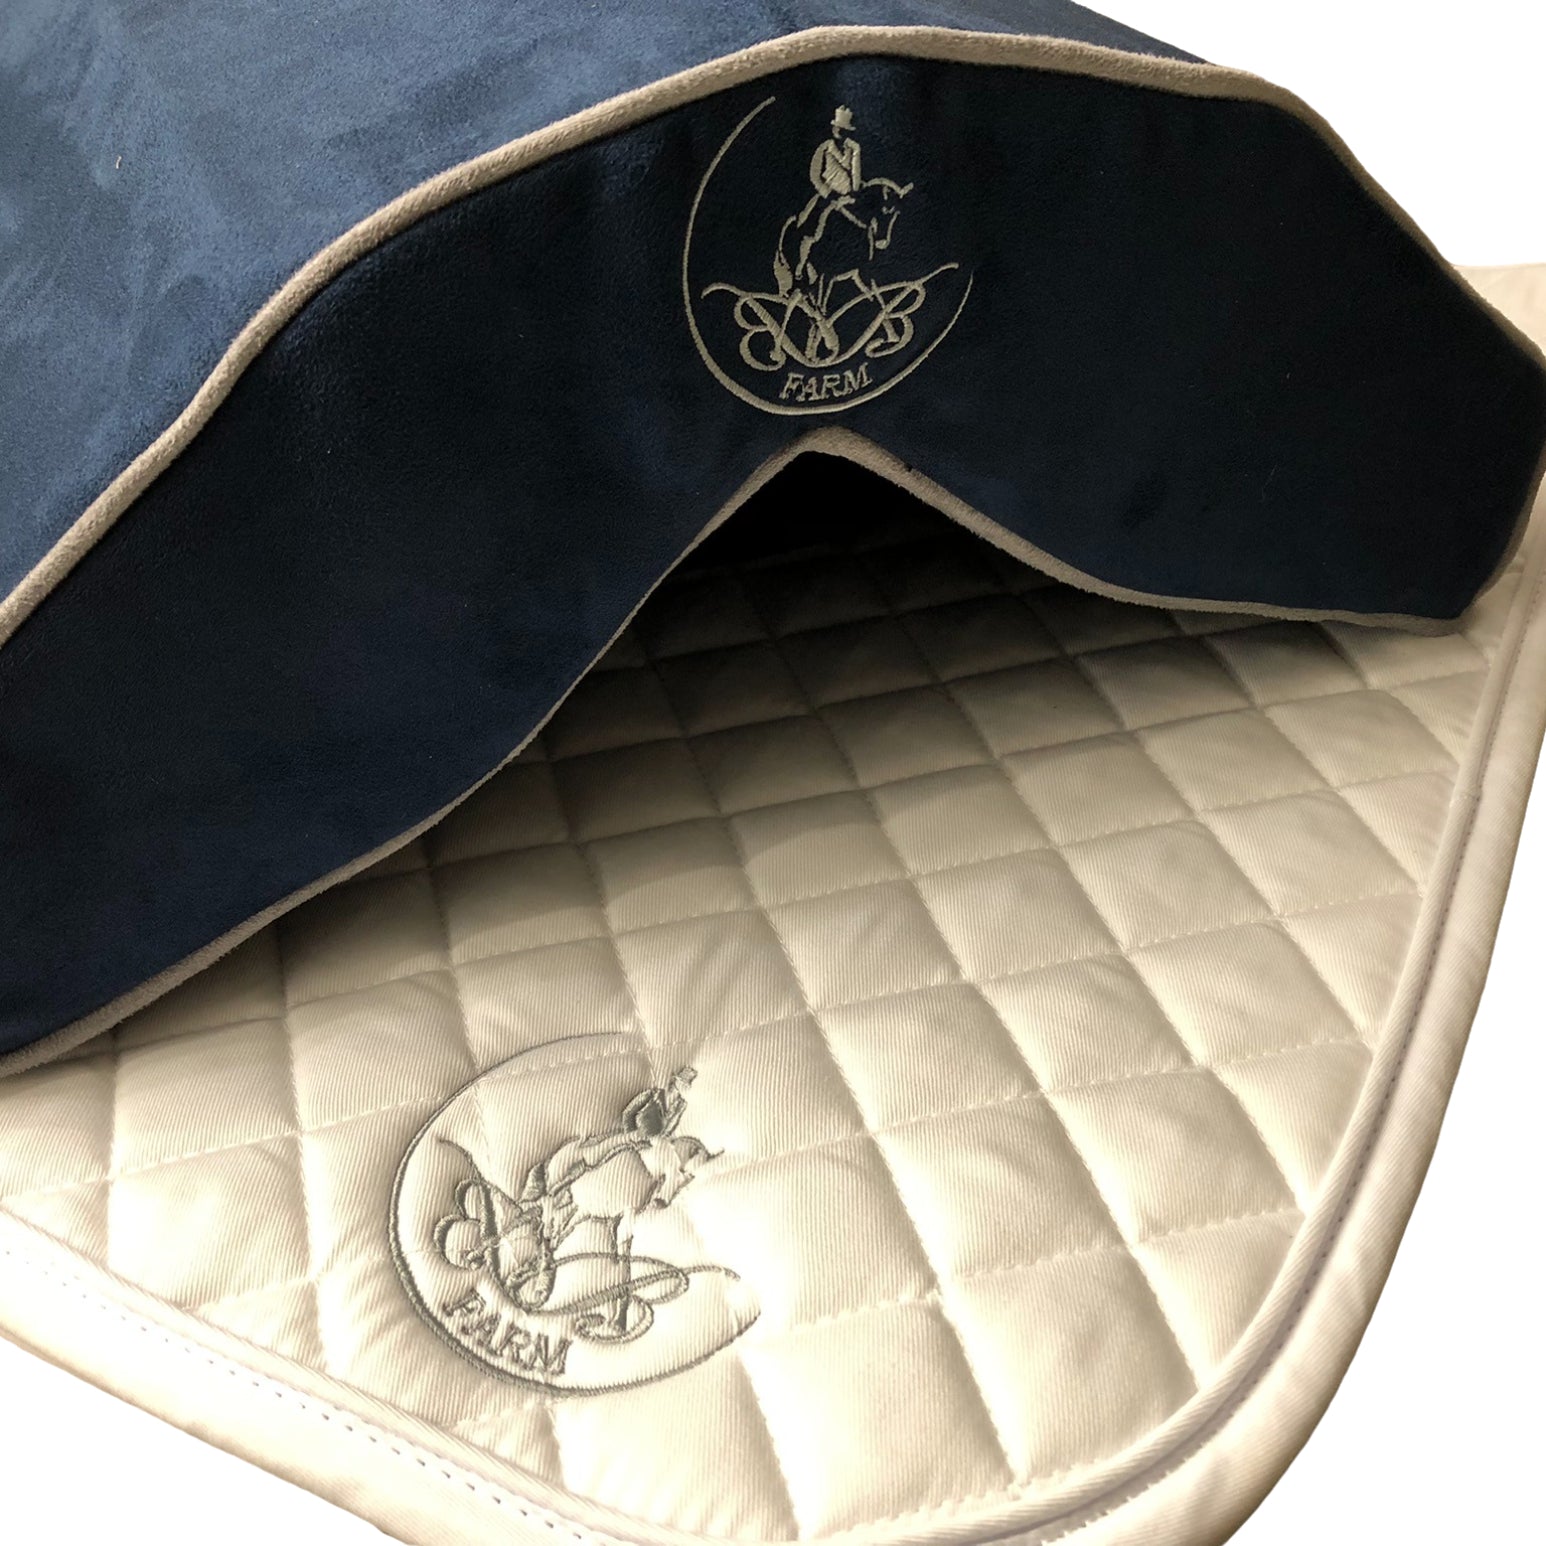 Vertex OWN logo with matching white saddle pad